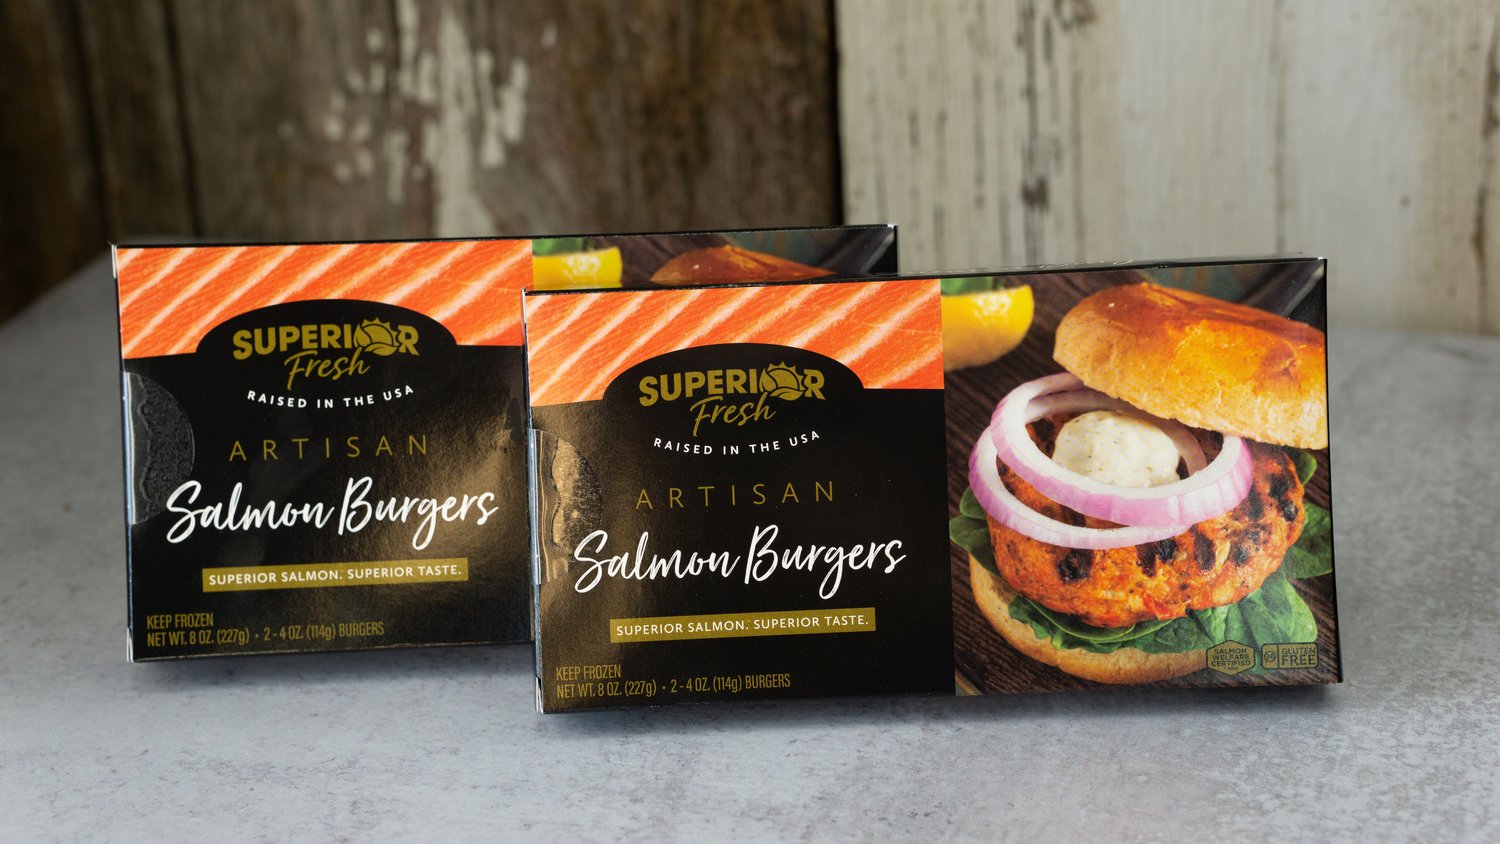 Artisan Salmon Burgers — Superior Fresh